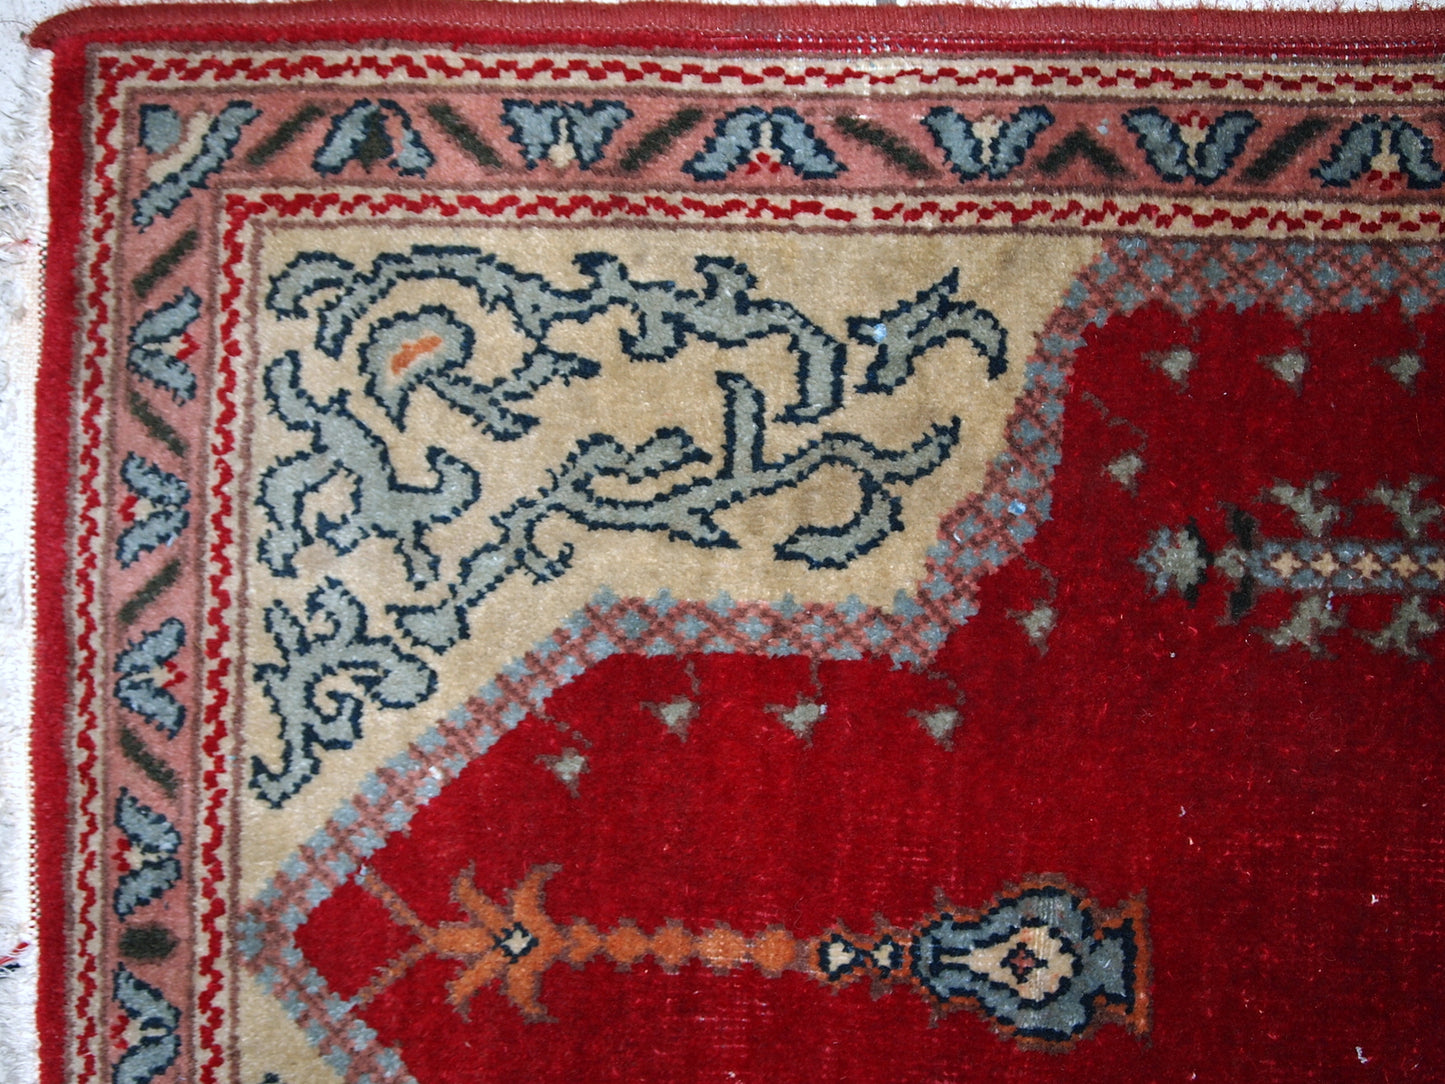 Handmade antique Turkish Konya rug 2.9' x 3.5' (69cm x 108cm) 1920s - 1C500